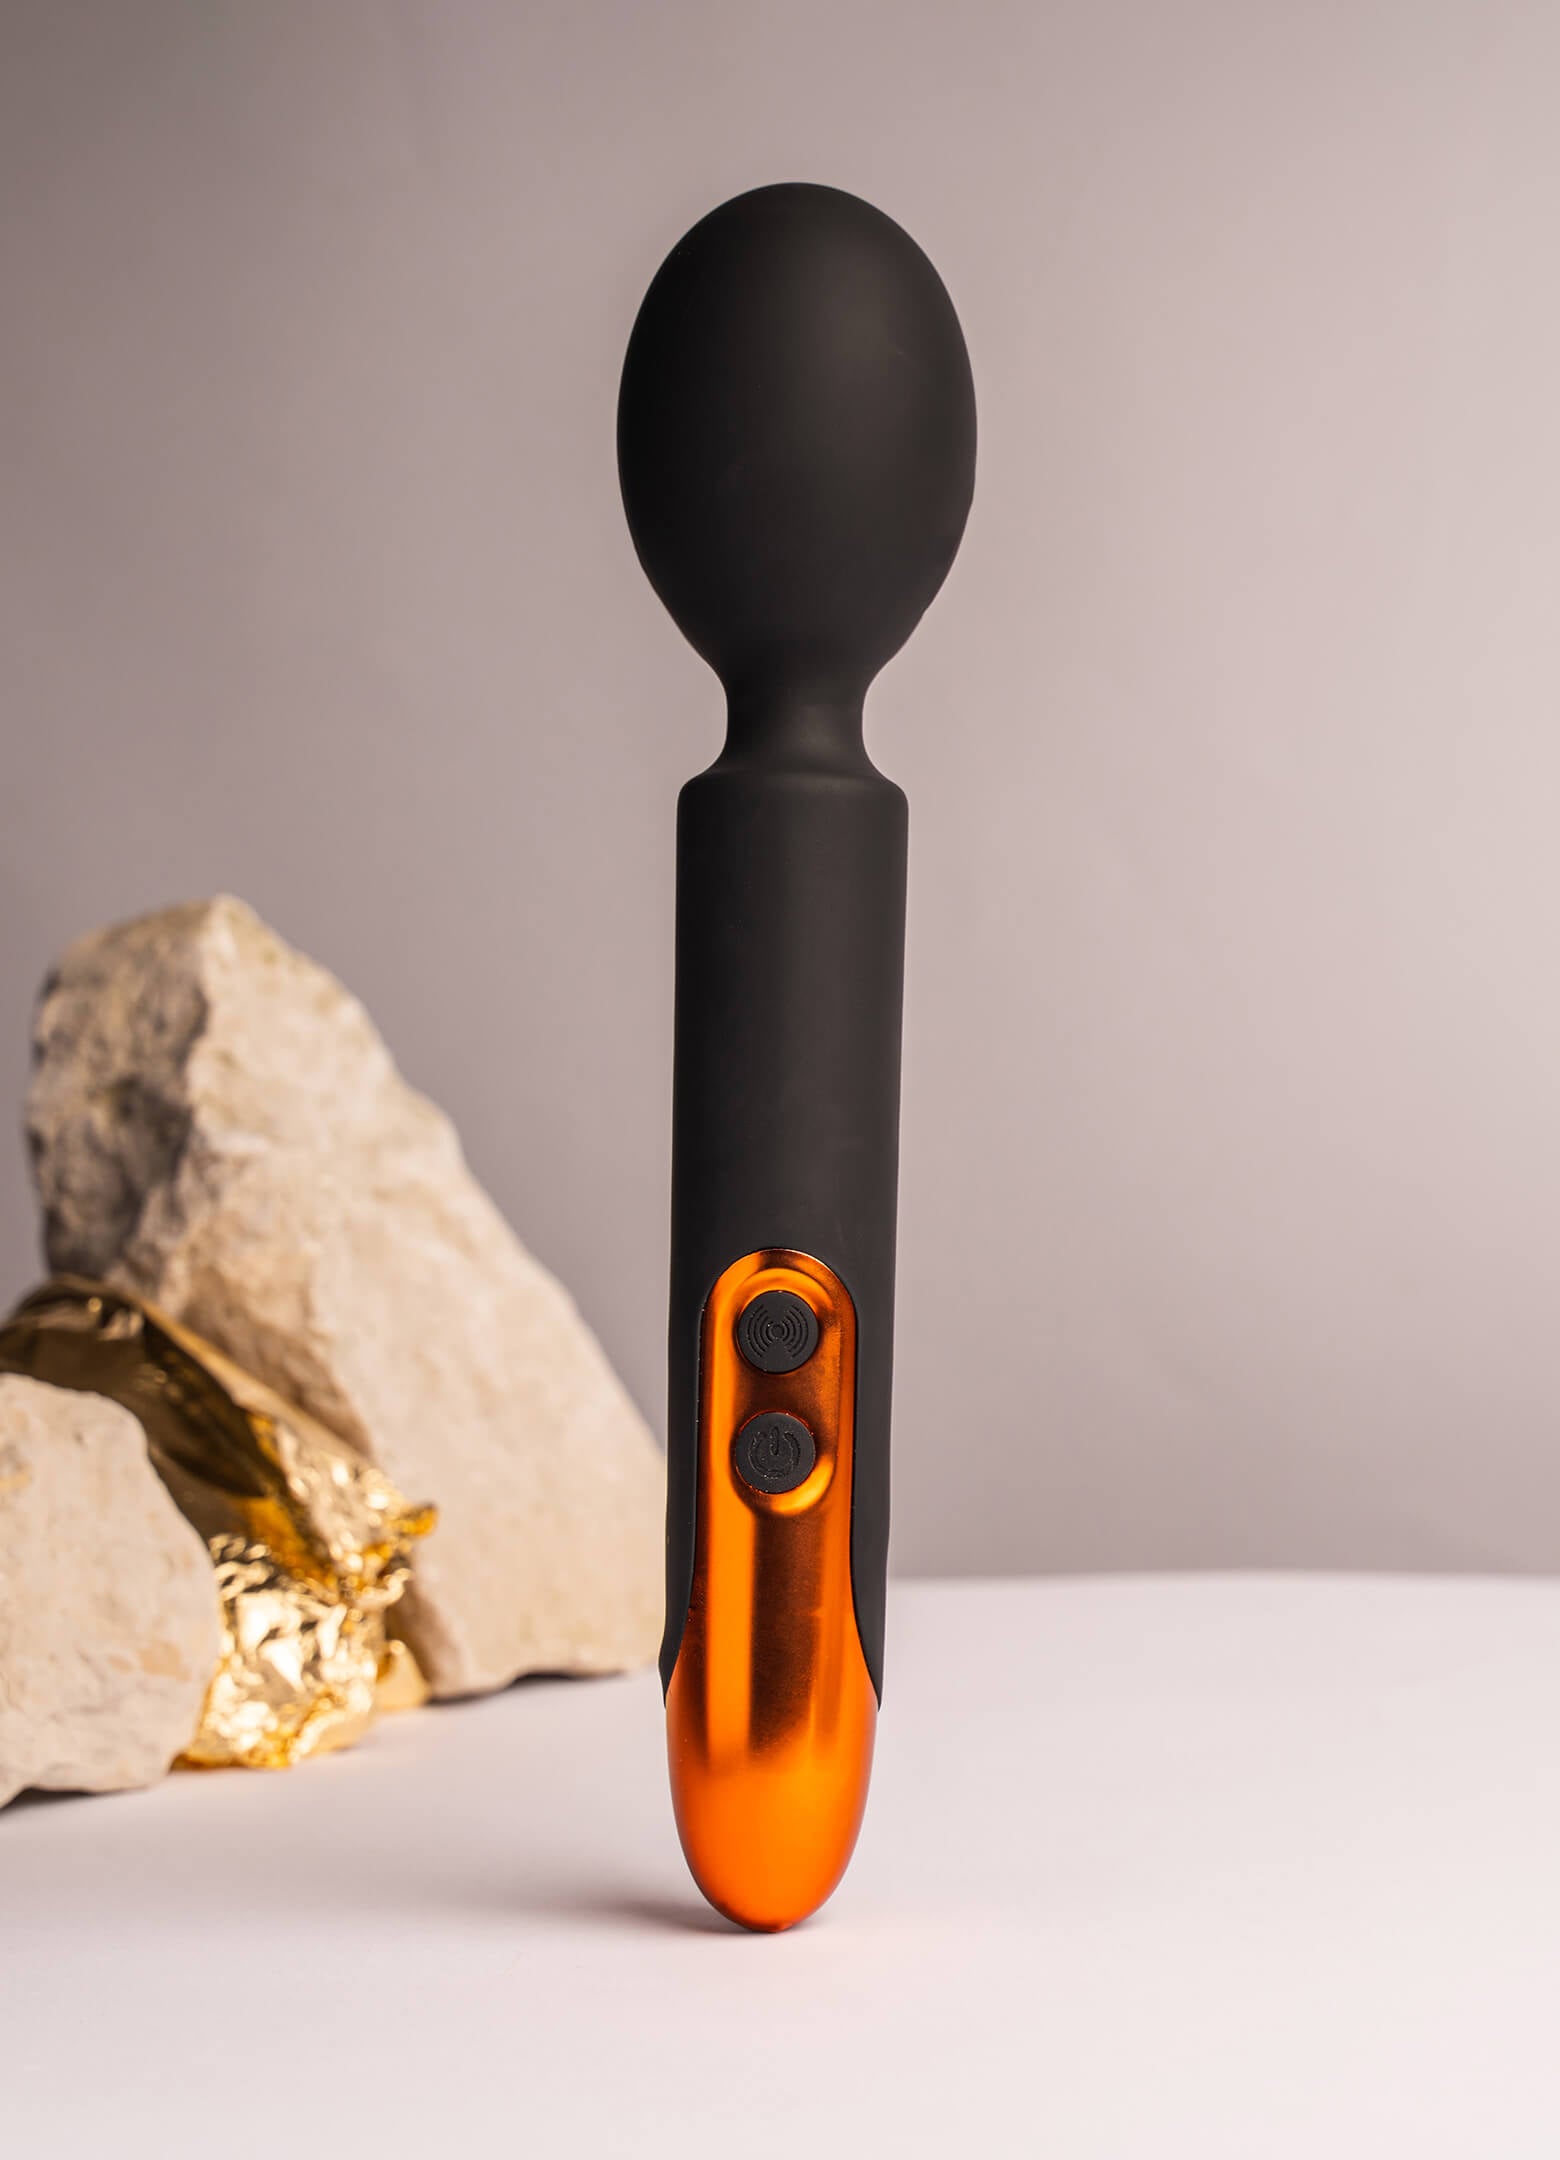 Silicone wand vibrator in black and copper.